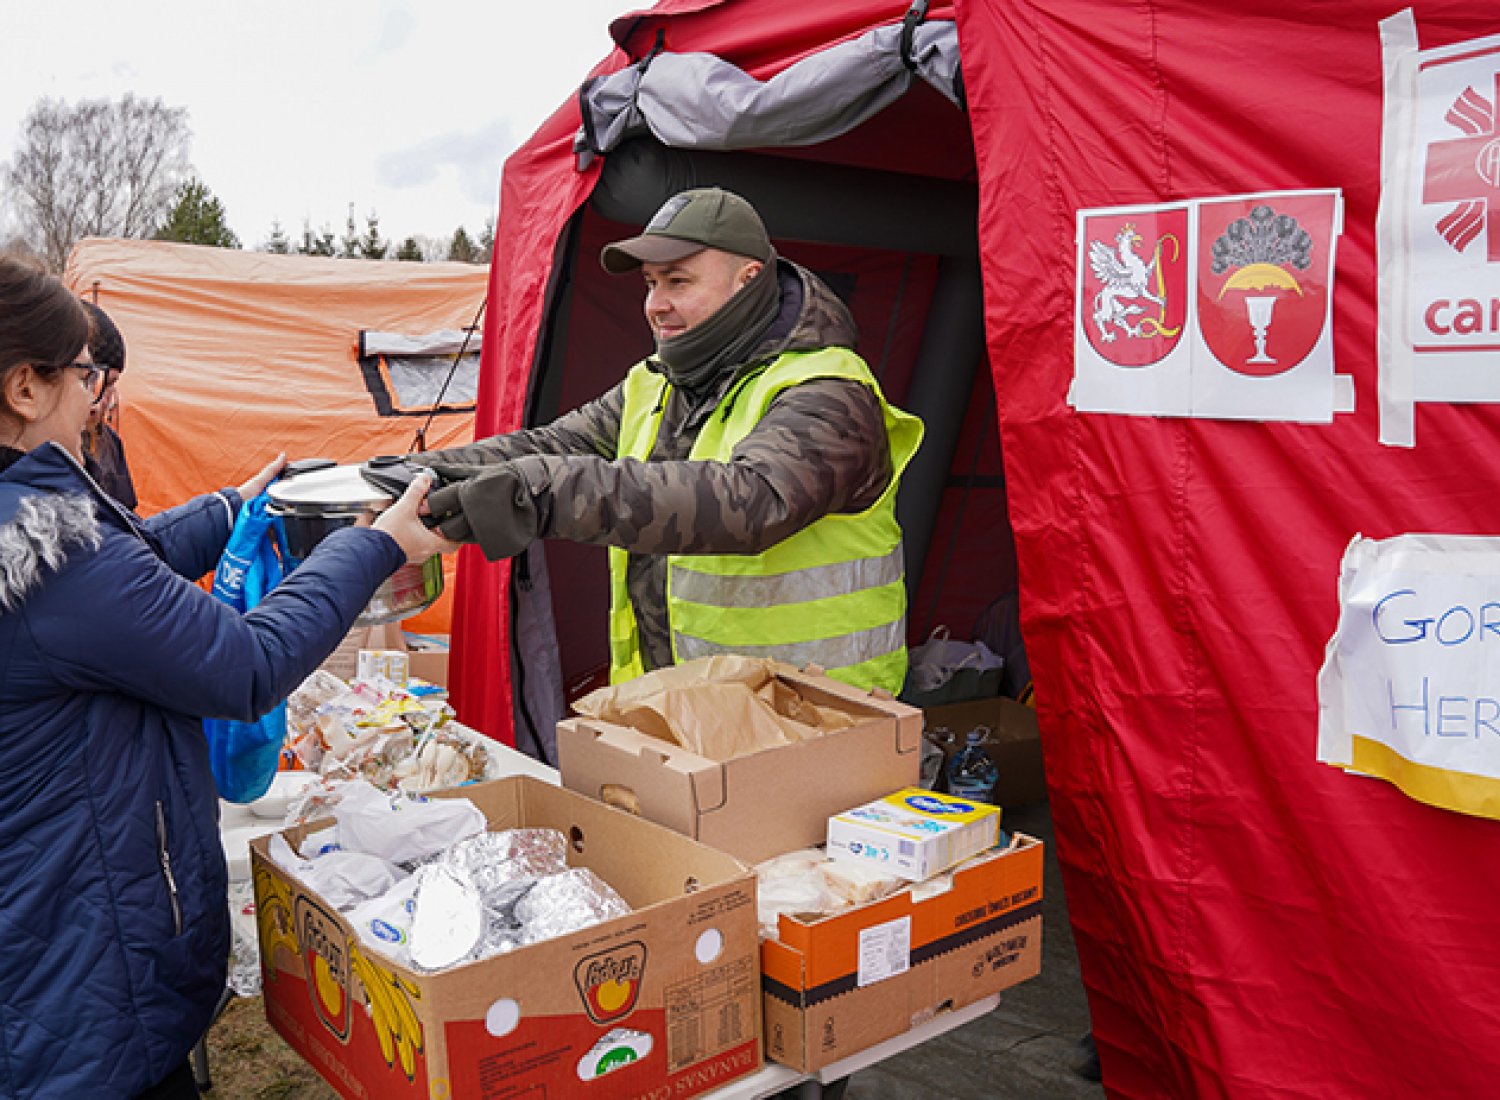 Tente humanitaire de Caritas Pologne